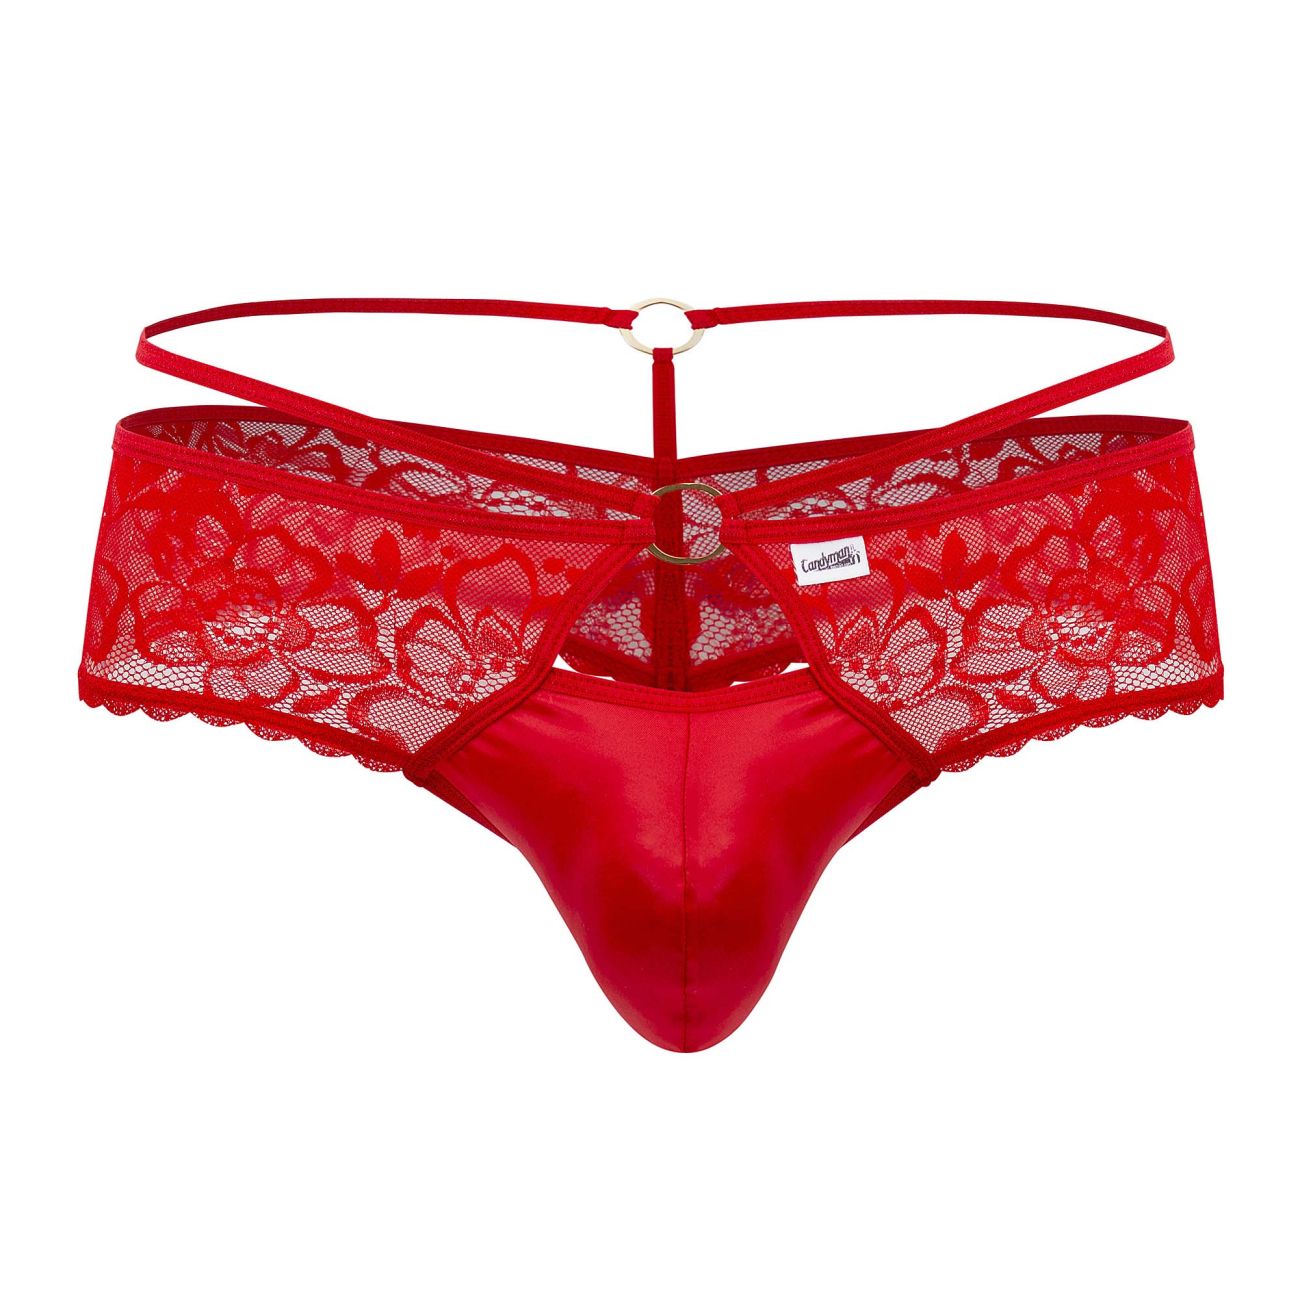 CandyMan 99647 Lace Thongs Red